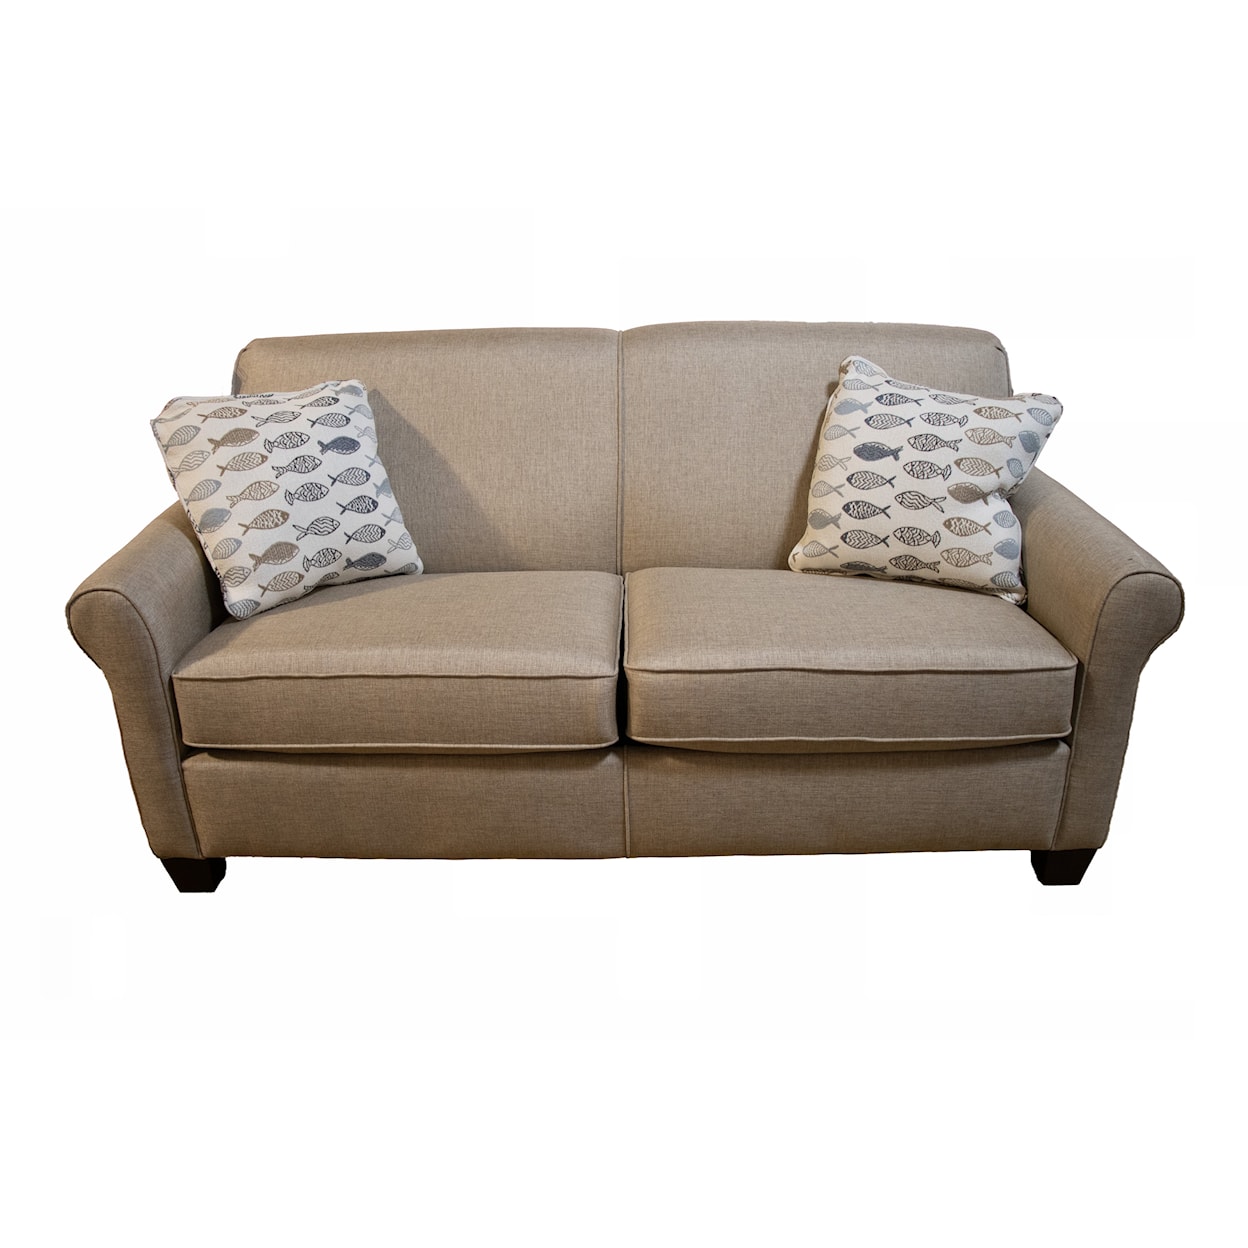 England 4630/LS Series Full Sleeper Sofa